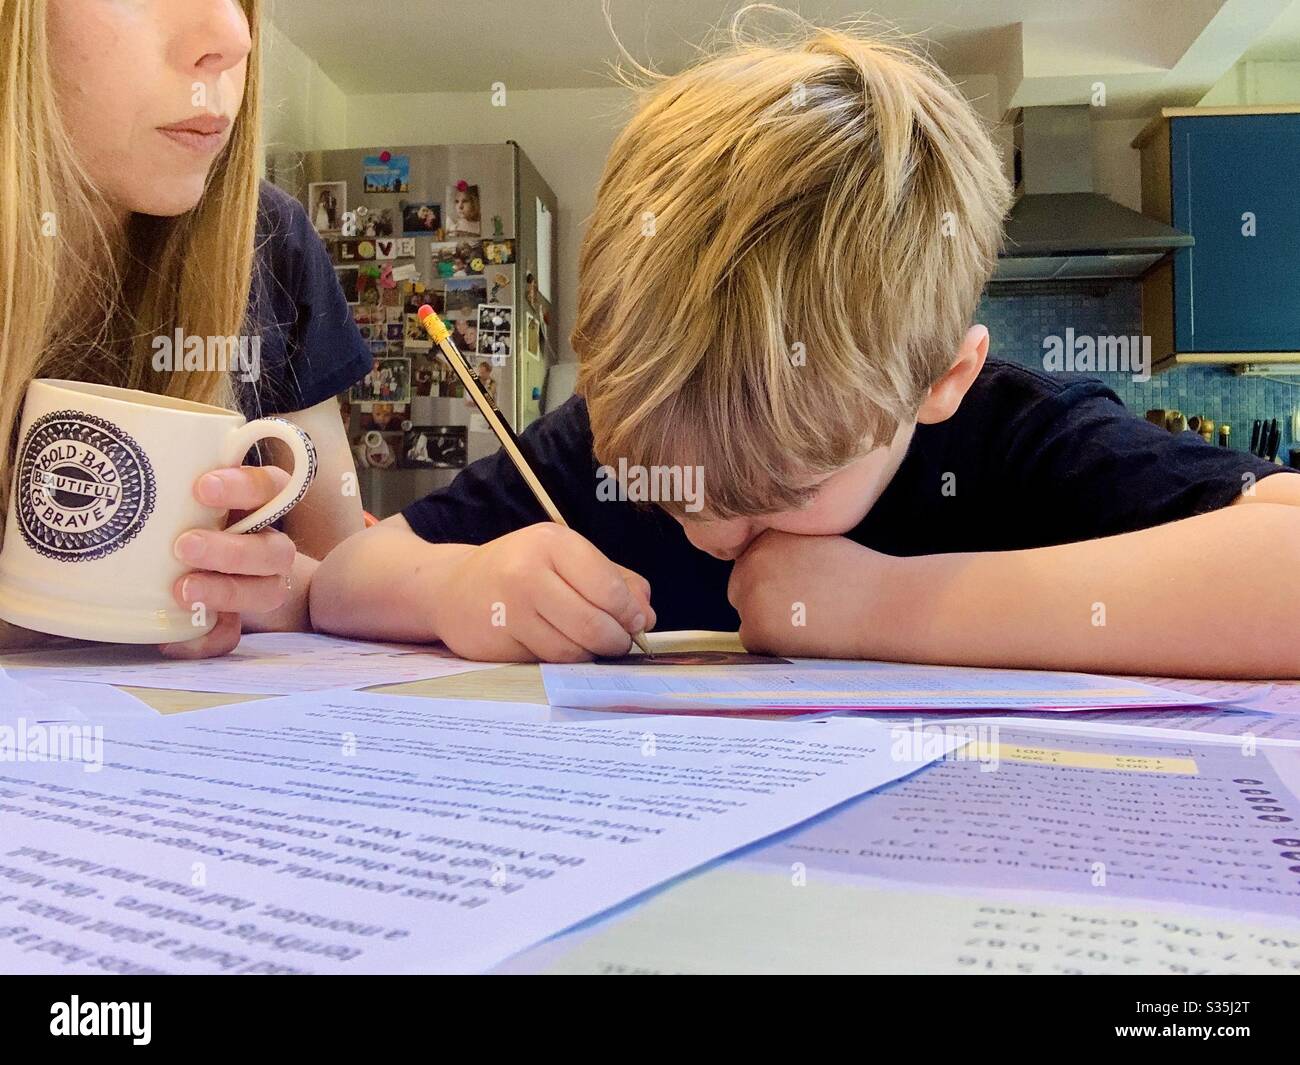 Home Schooling during the Coronavirus Pandemic, April 2020 Stock Photo